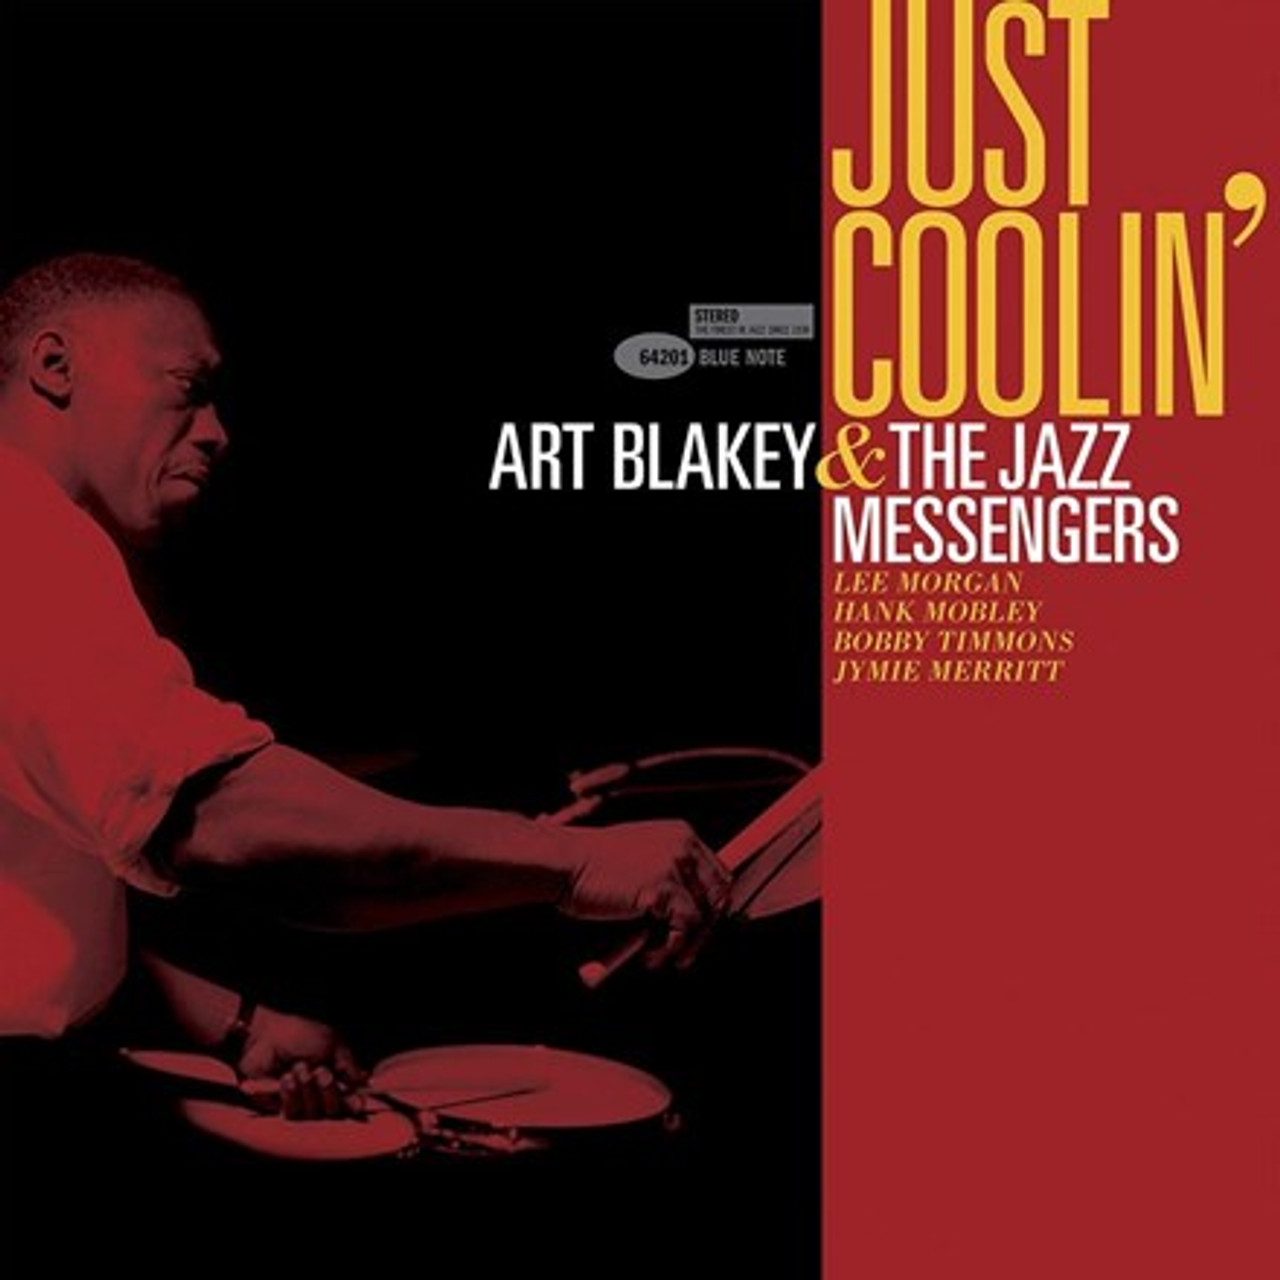 Art Blakey and the Jazz Messengers - Just Coolin (180g Vinyl LP)